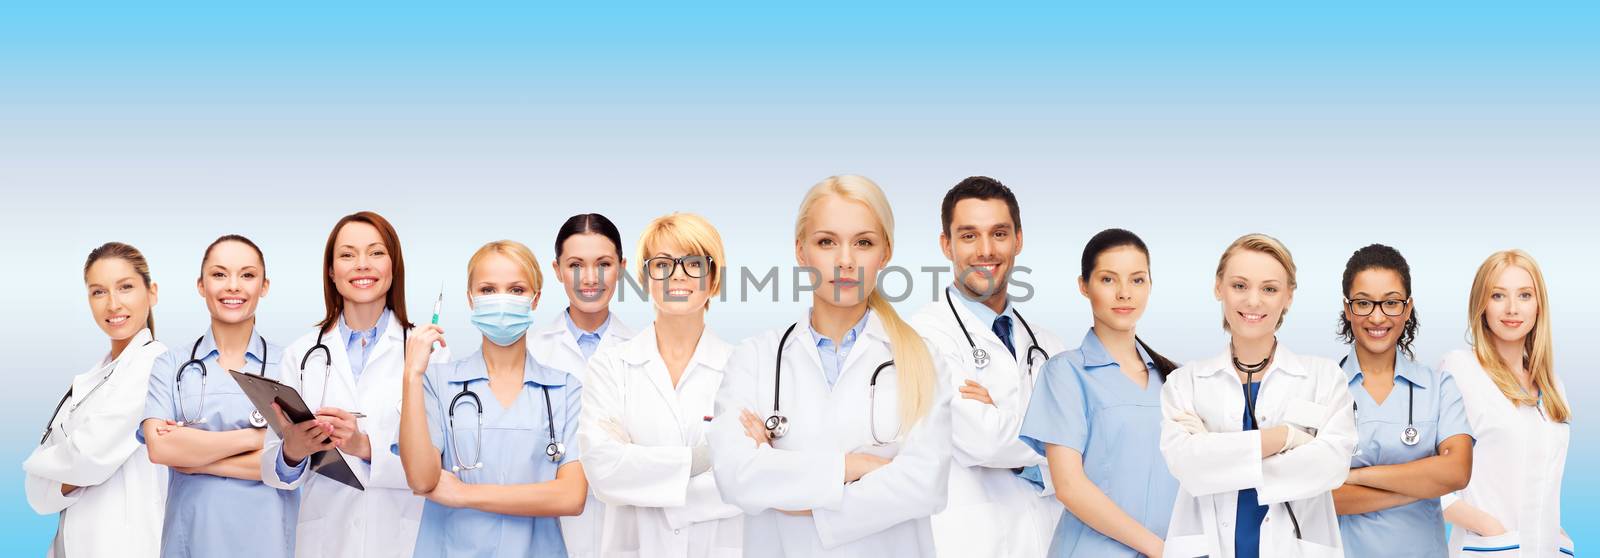 team or group of doctors and nurses by dolgachov